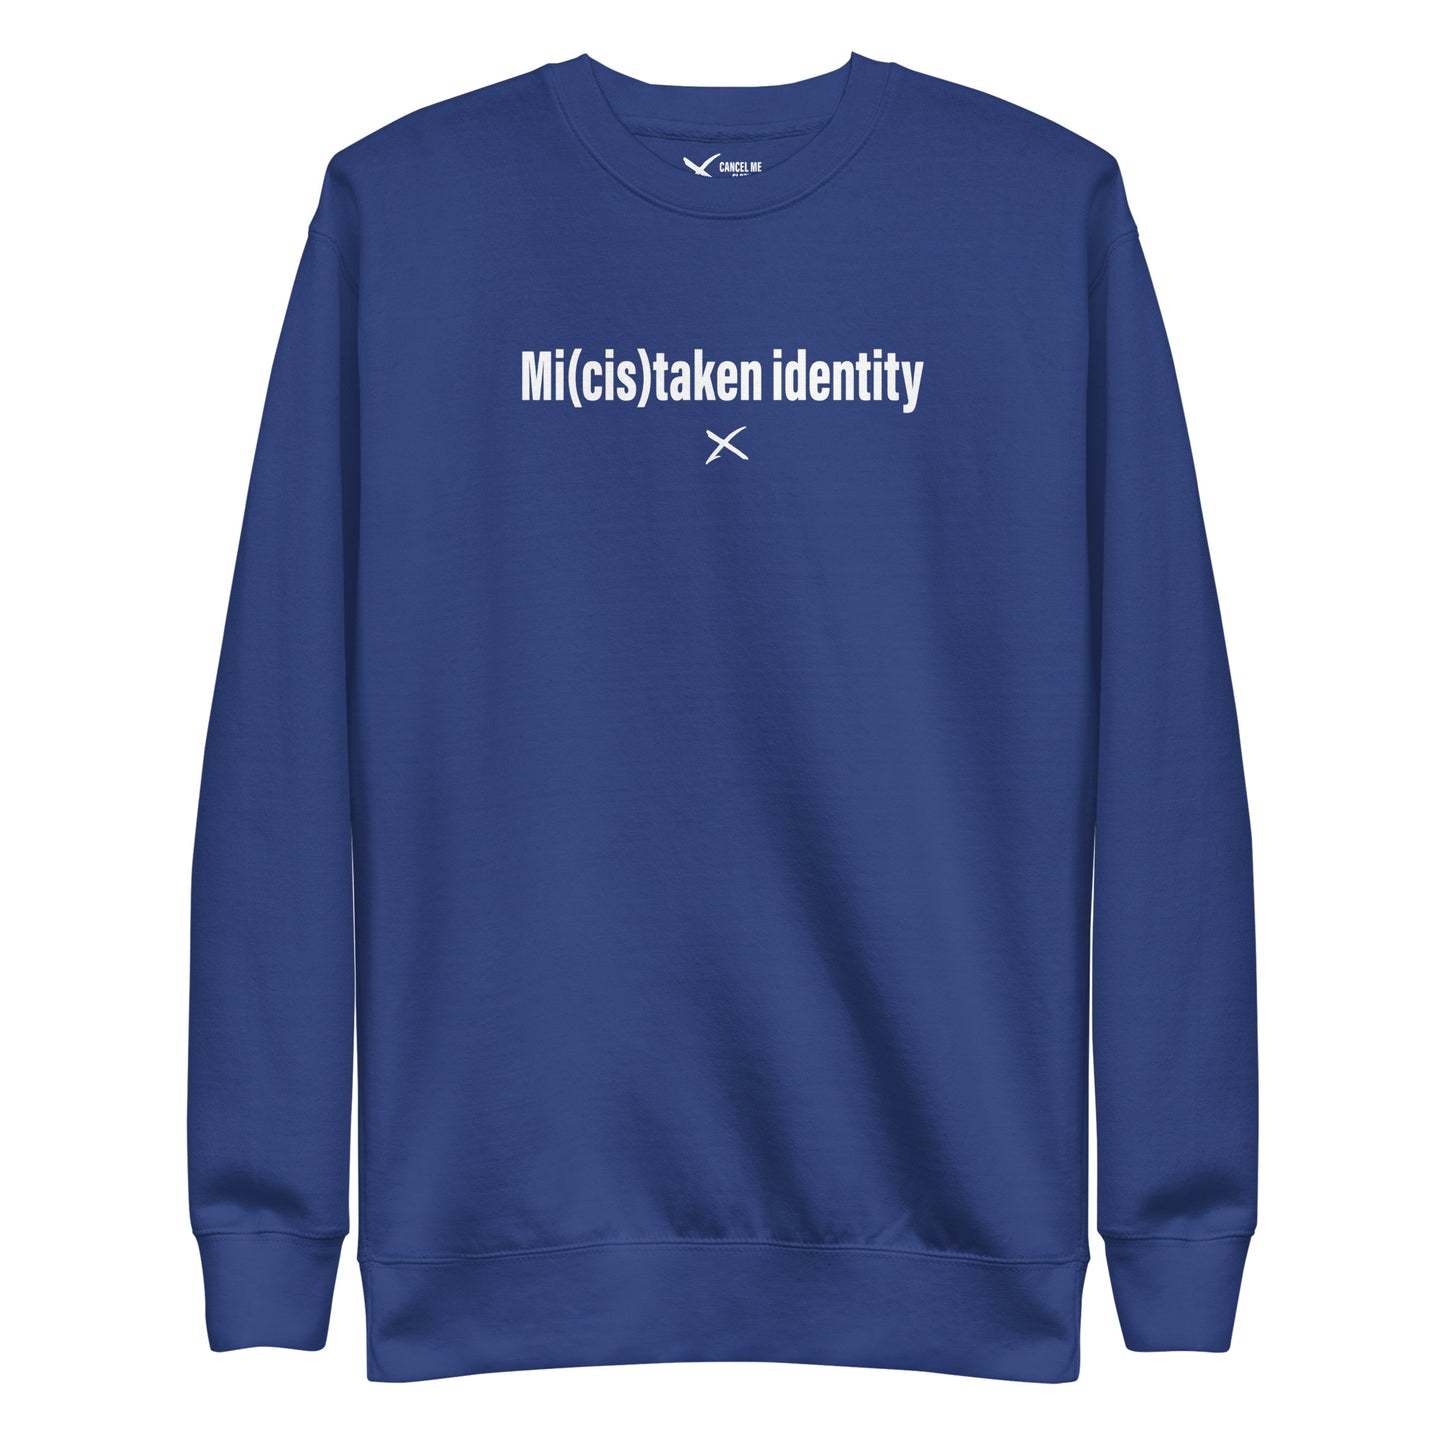 Mi(cis)taken identity - Sweatshirt